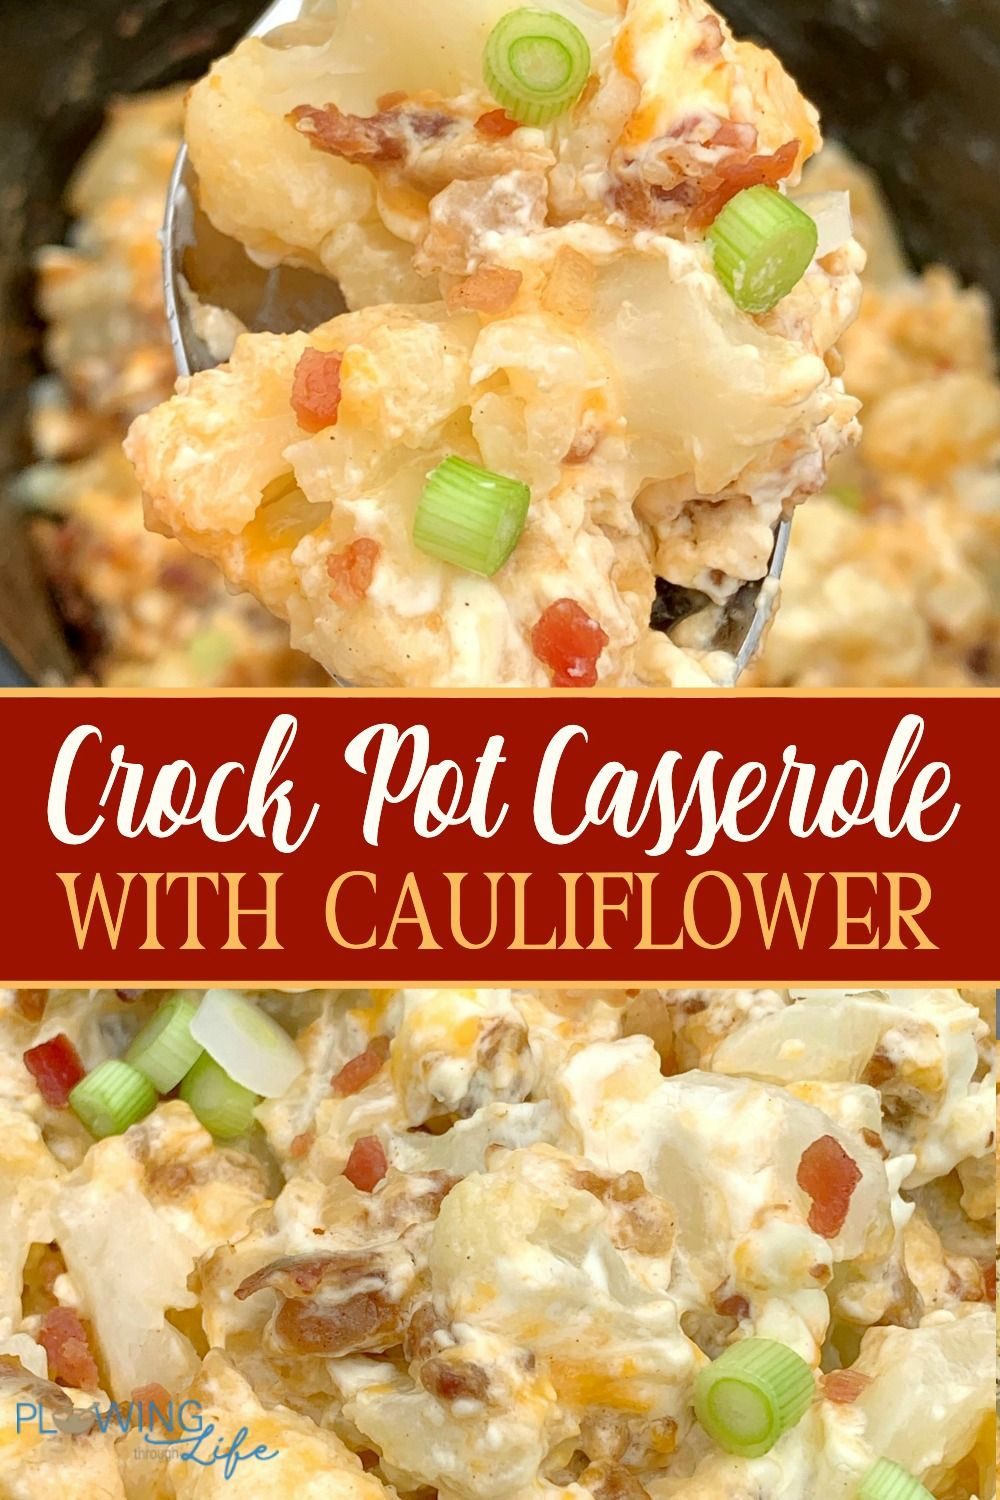 Crockpot Side Dishes For Potluck
 Loaded crock pot cauliflower